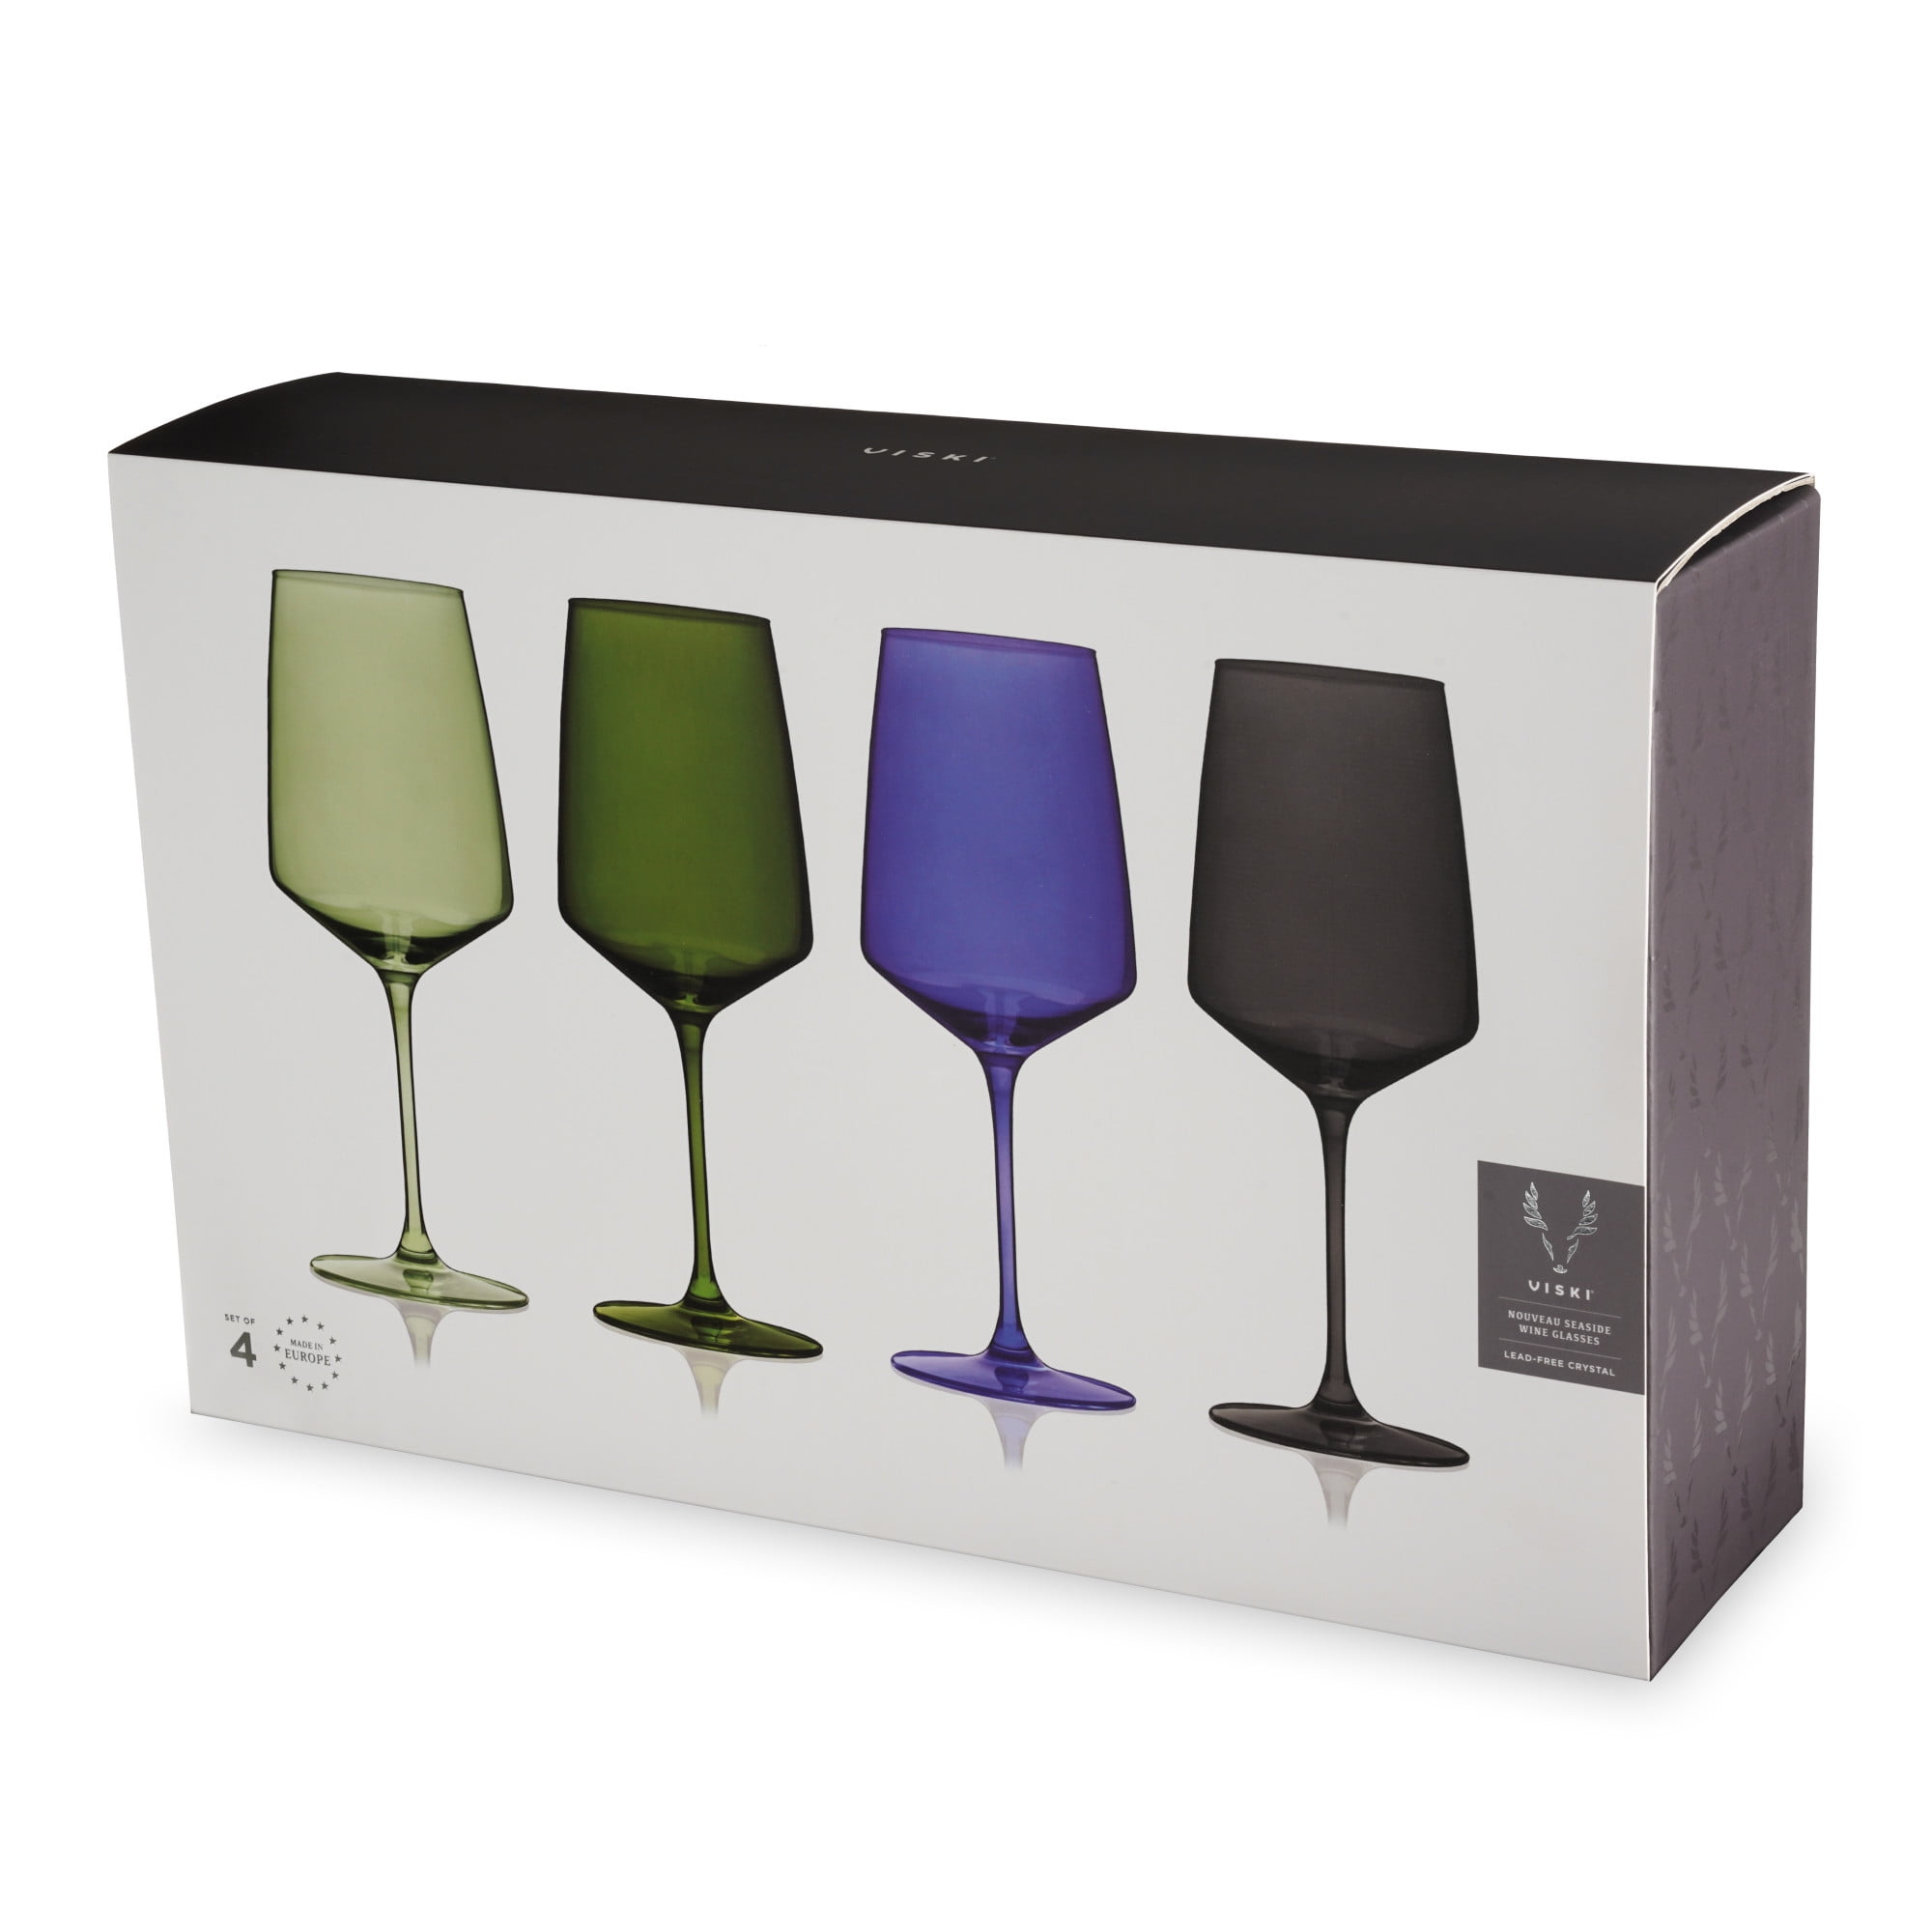 Harmony Stemless Wine Glasses - Set of 2 - Kiawah Island Golf Resort Shop